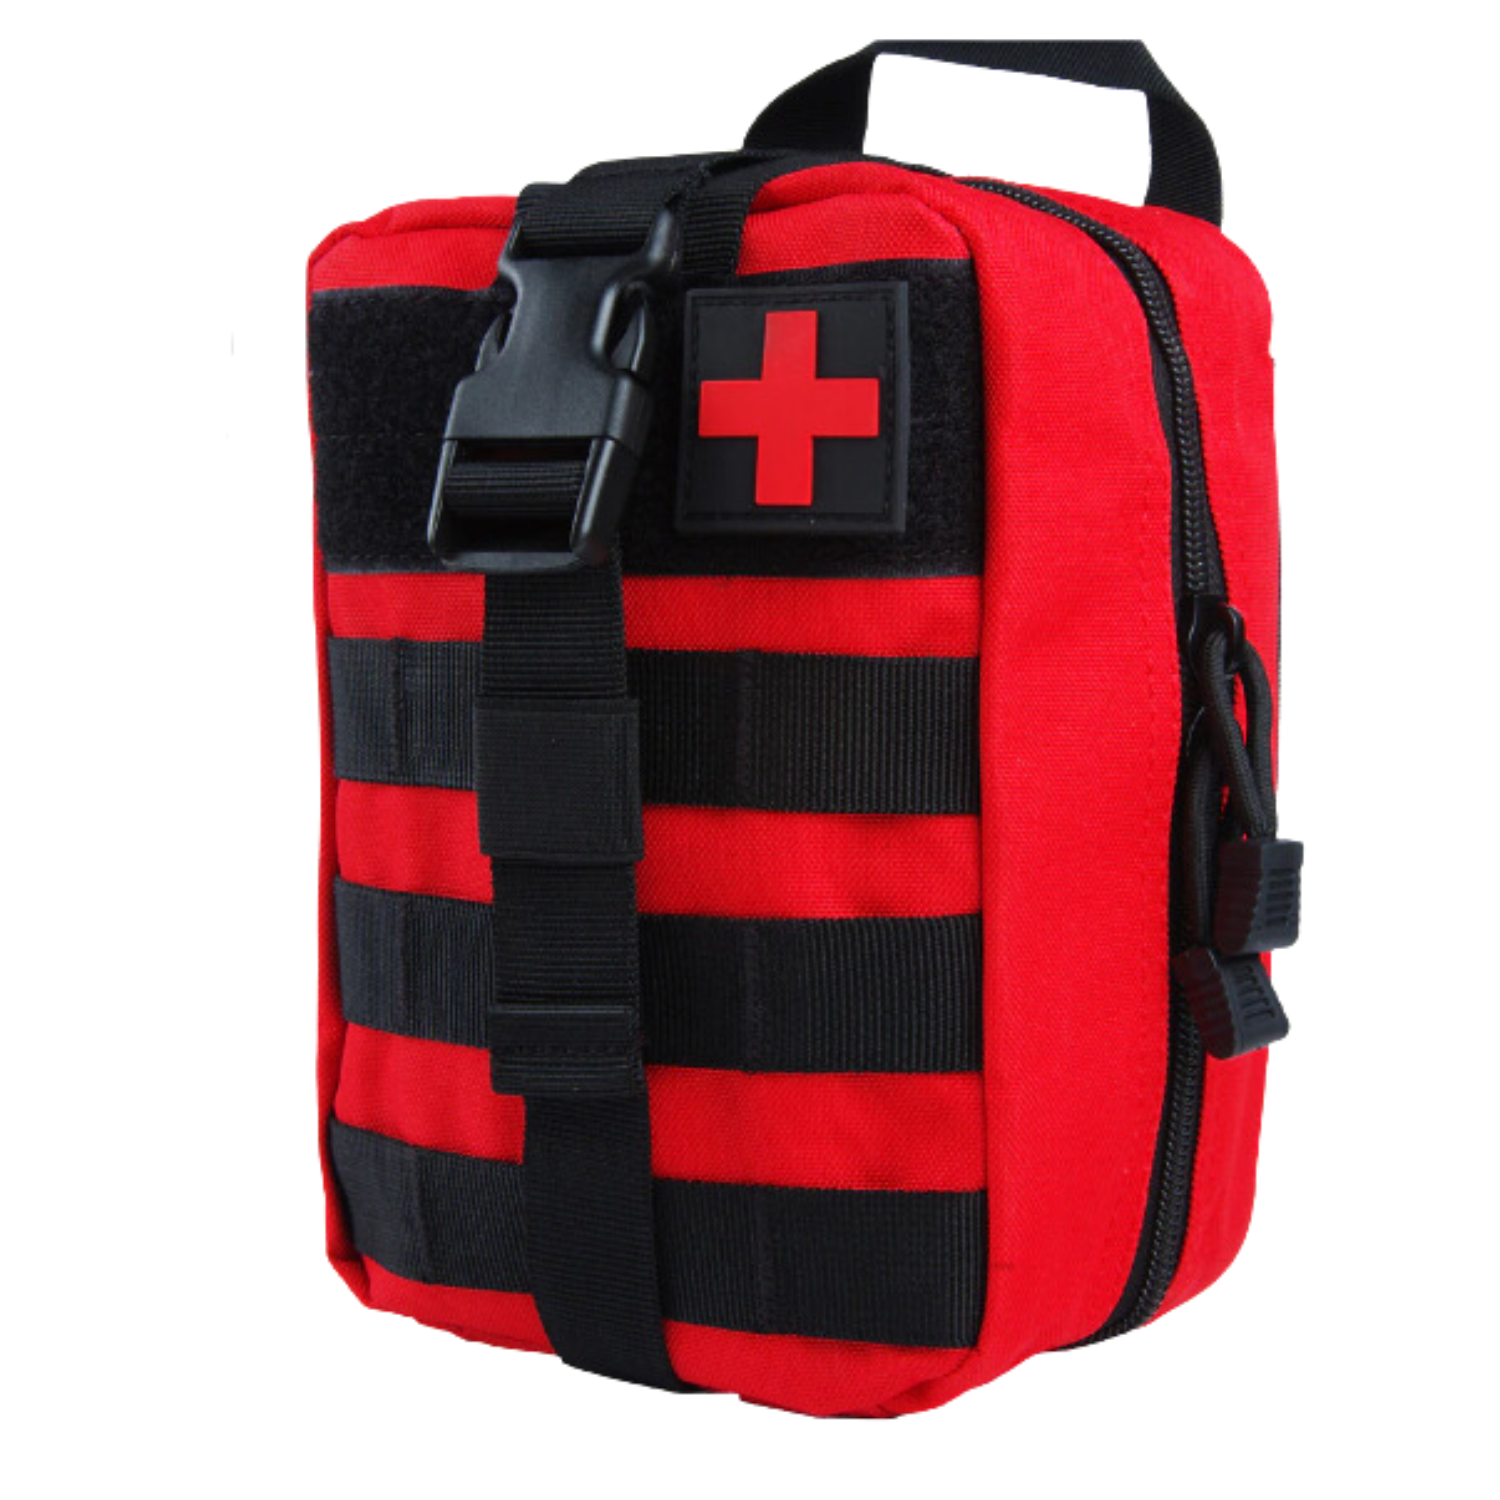 First Aid Trauma Tactical Kit Bag Emergency / SURVIVAL